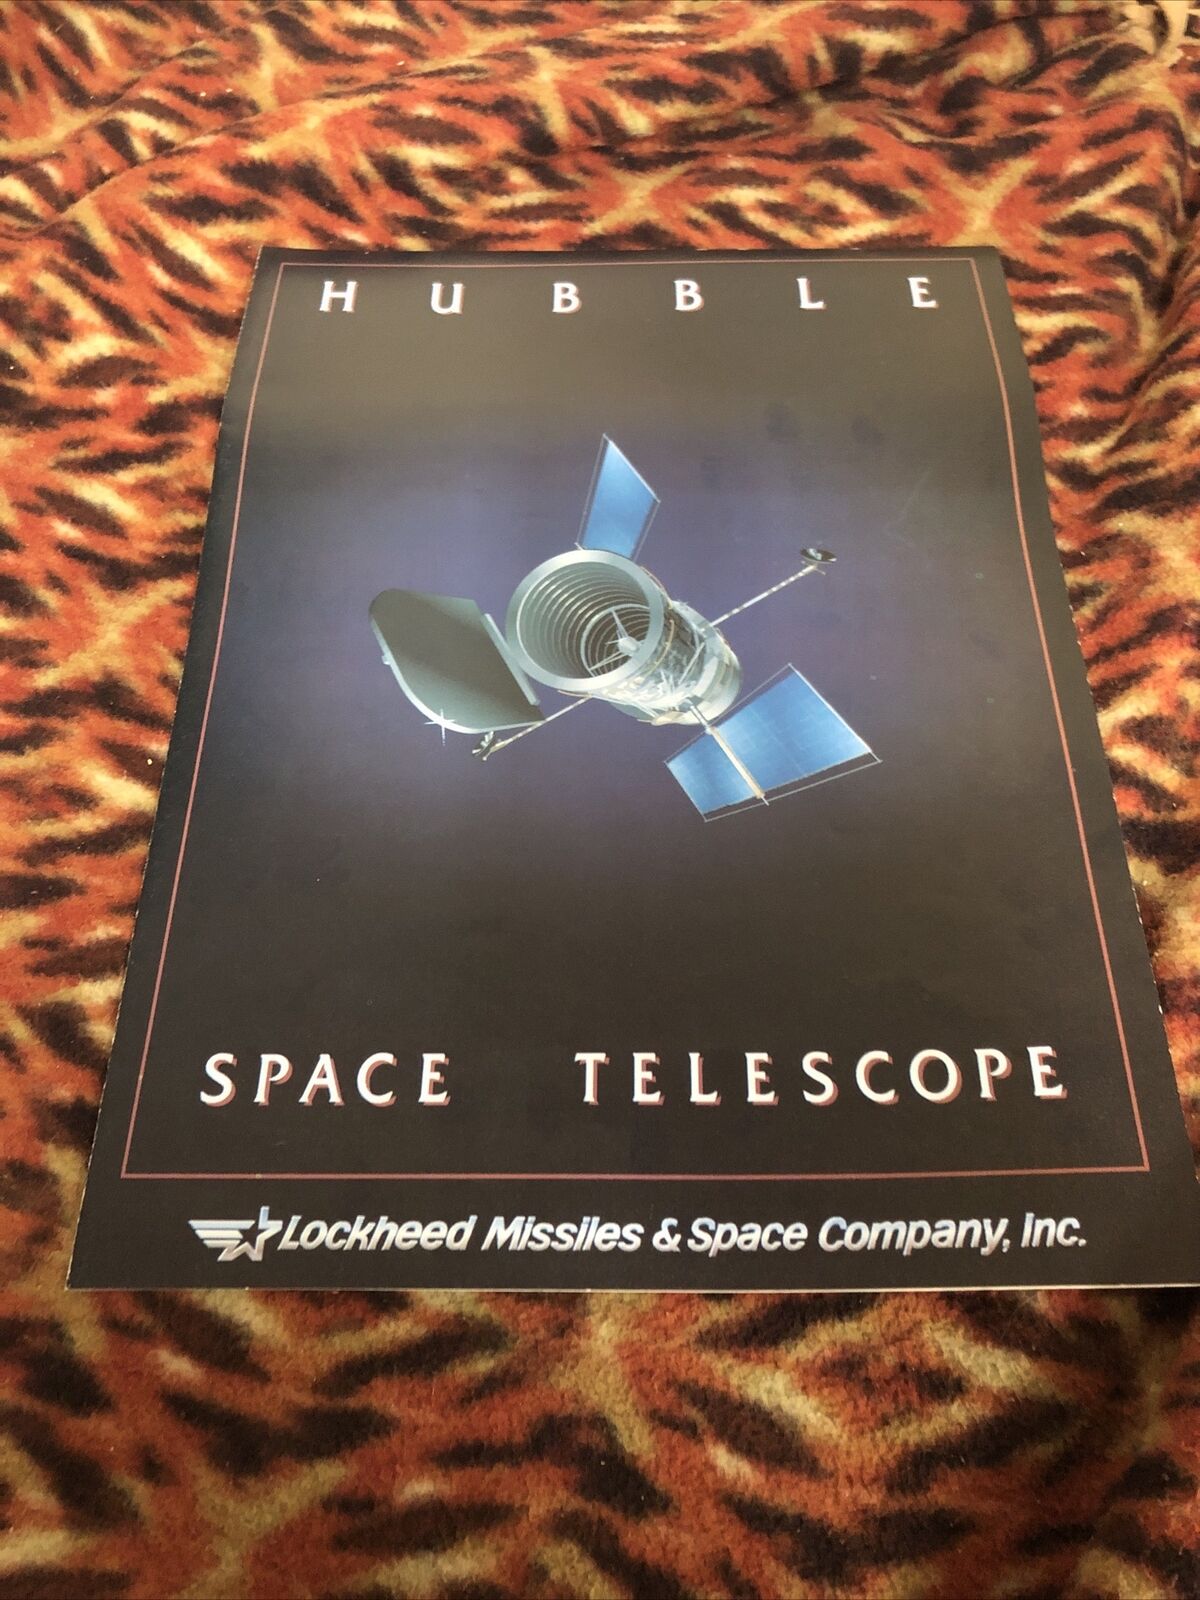 Hubble Telescope Lockheed Company Informational Oversized Brochure